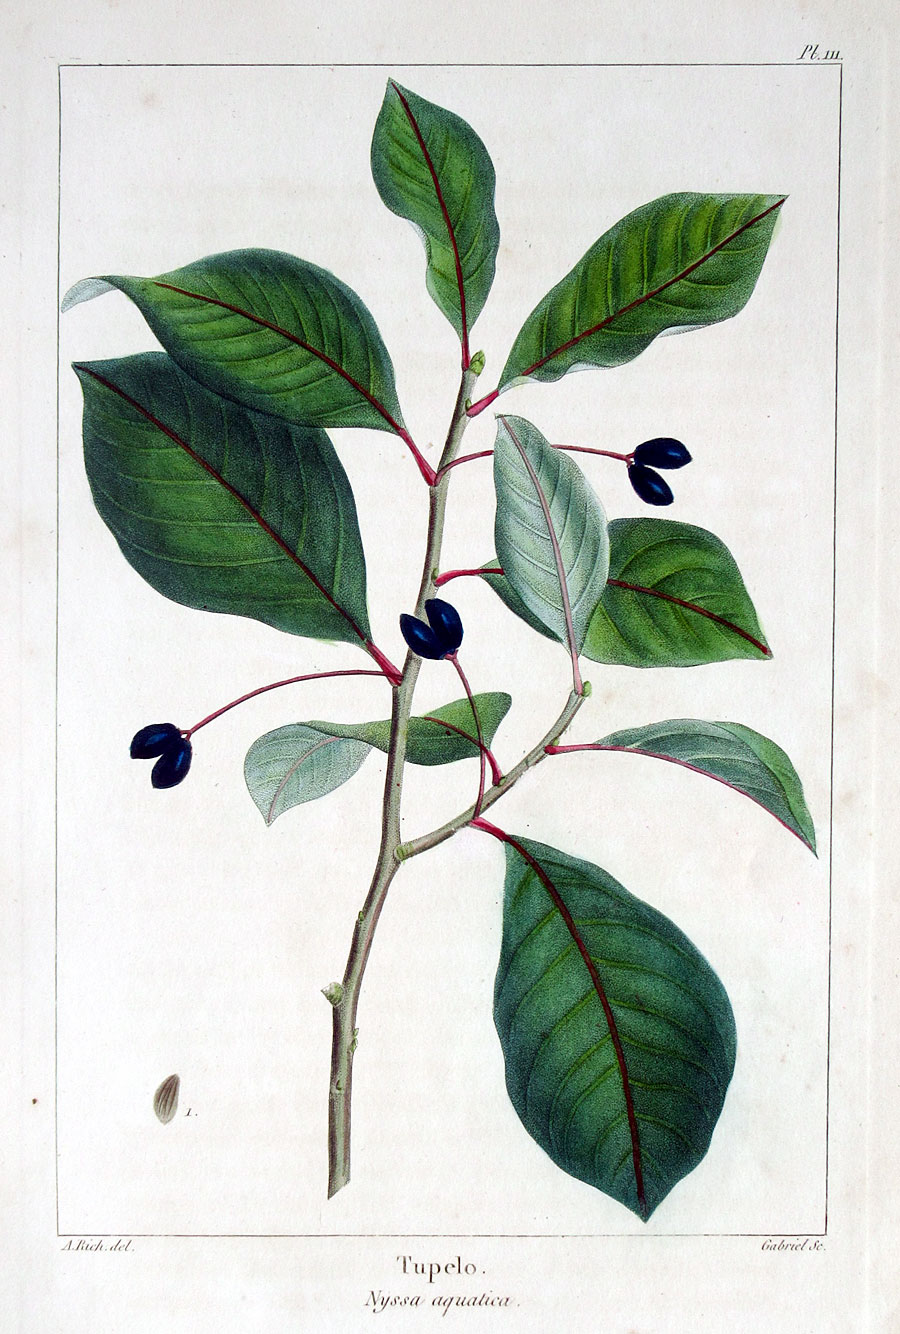 American Tree Leaves - 1857 - Michaux - Tupelo